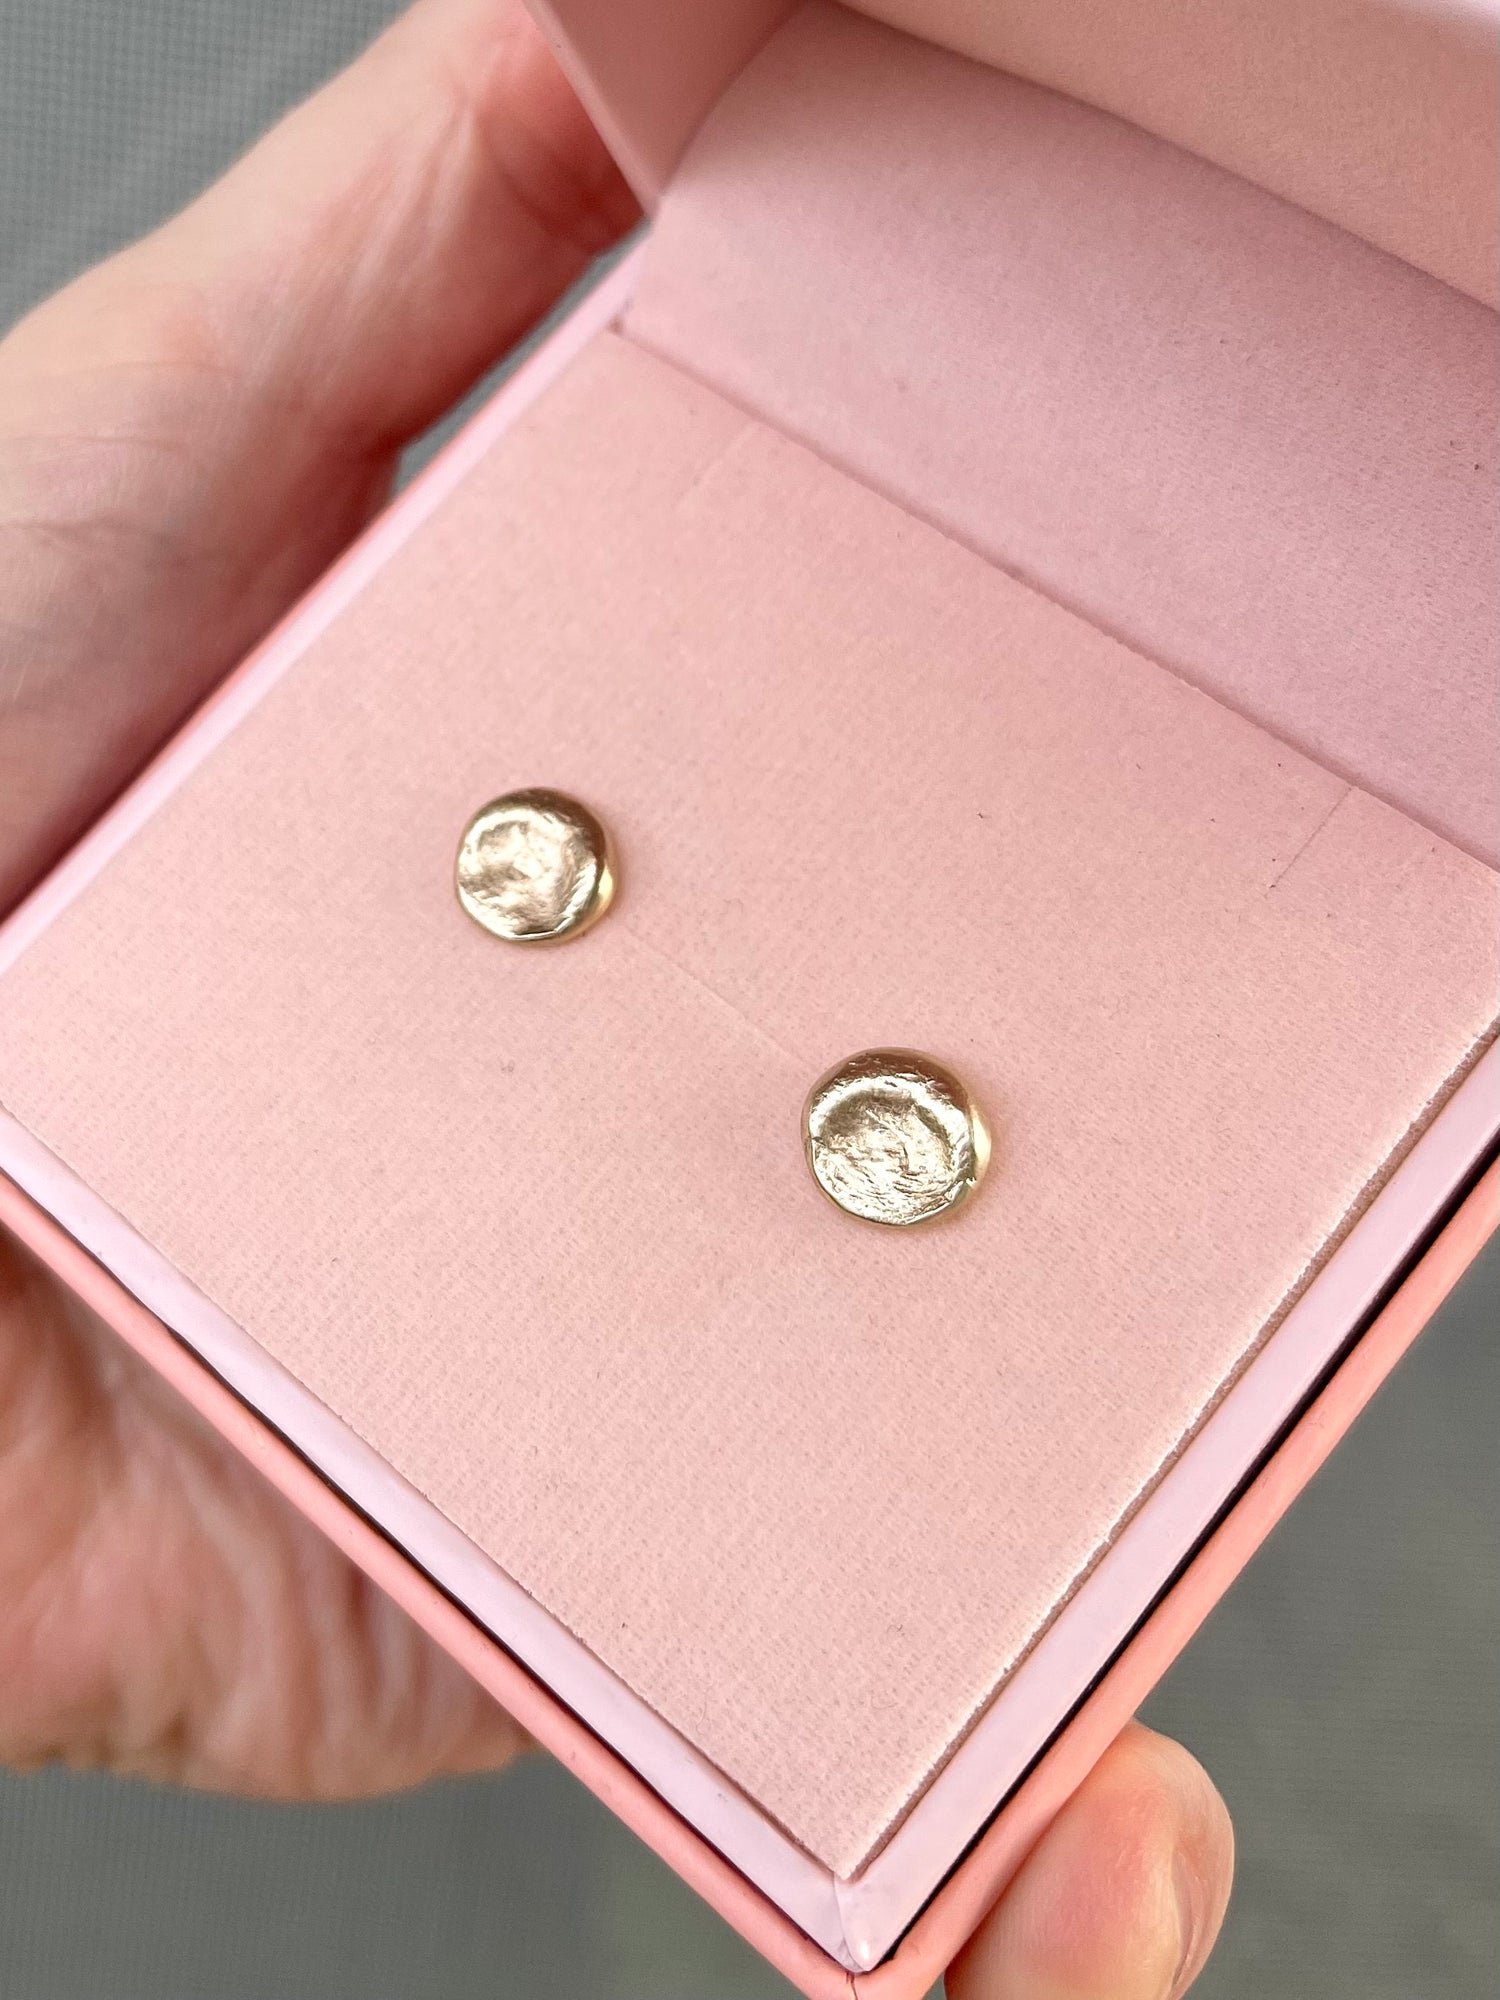 Fingerprint Earrings - Sterling Silver + 9ct Gold Print Impression Kit + Studs